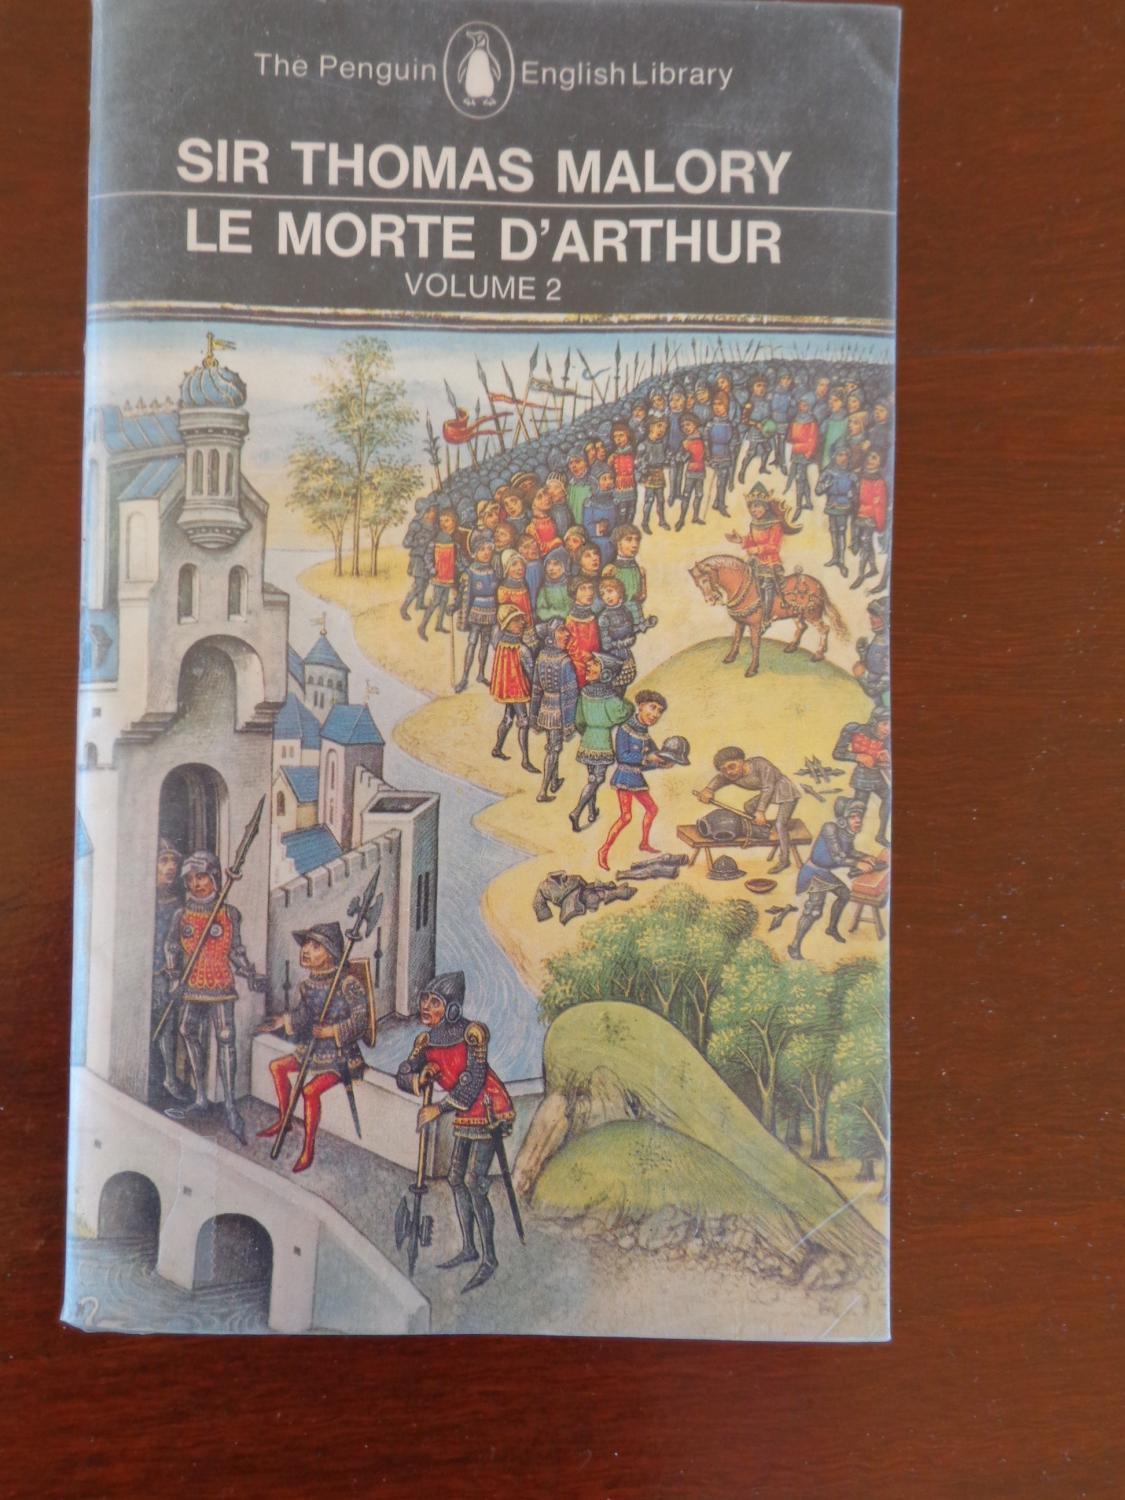 Le Morte DArthur Vol 2 - Sir Thomas Malory